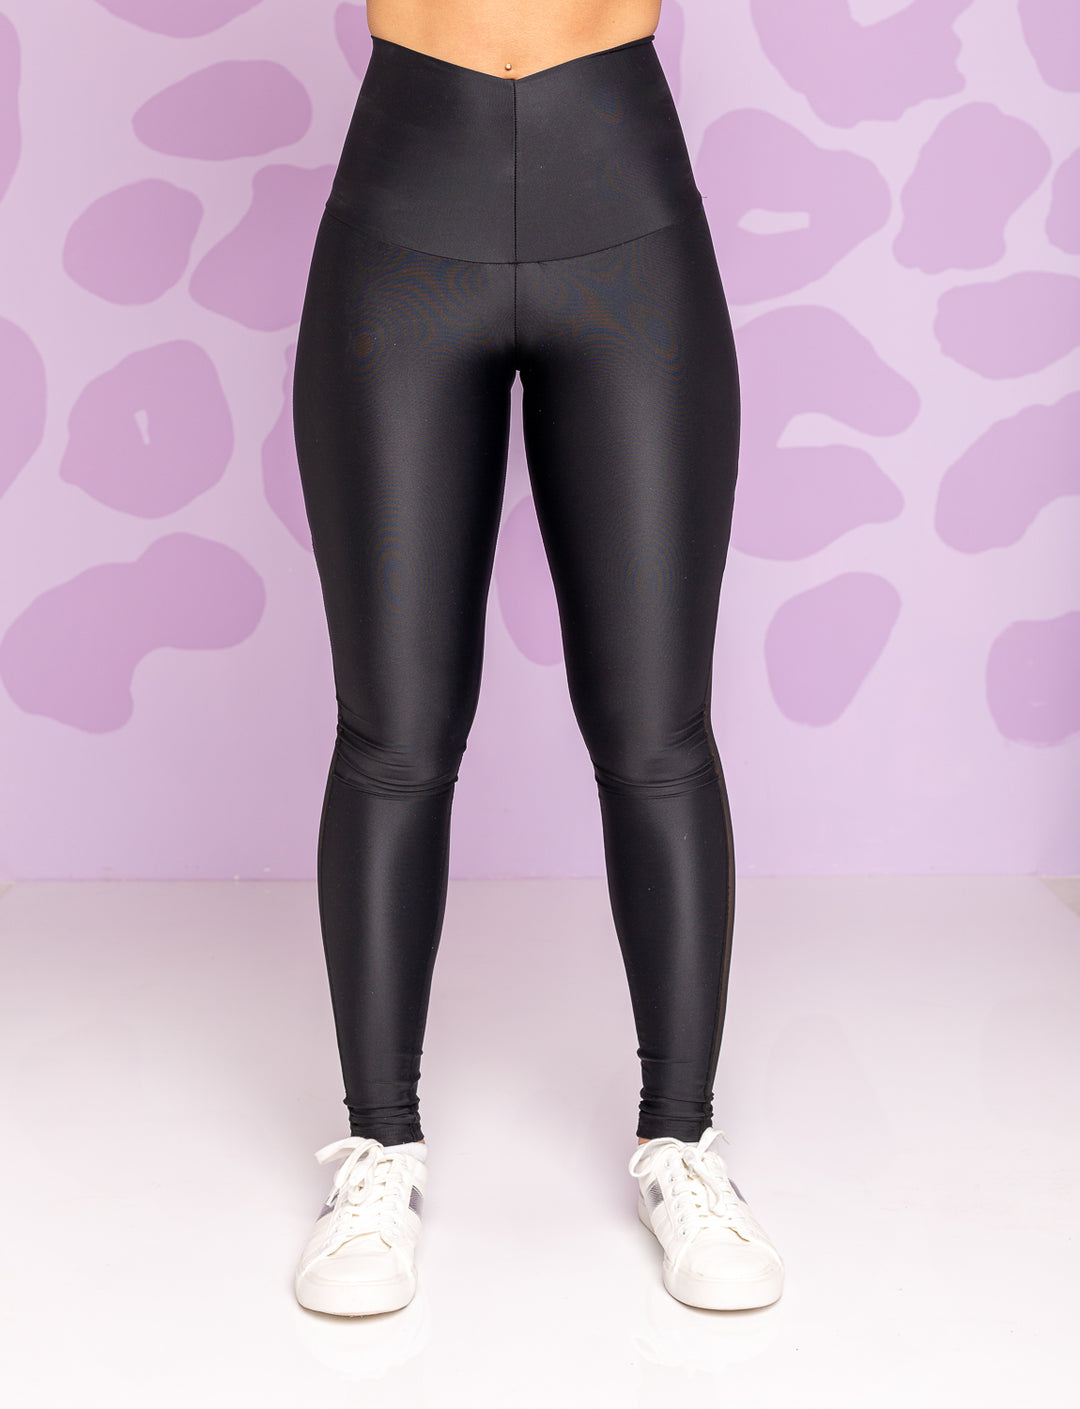 holographic silver leg logo black legging tights medium Victoria